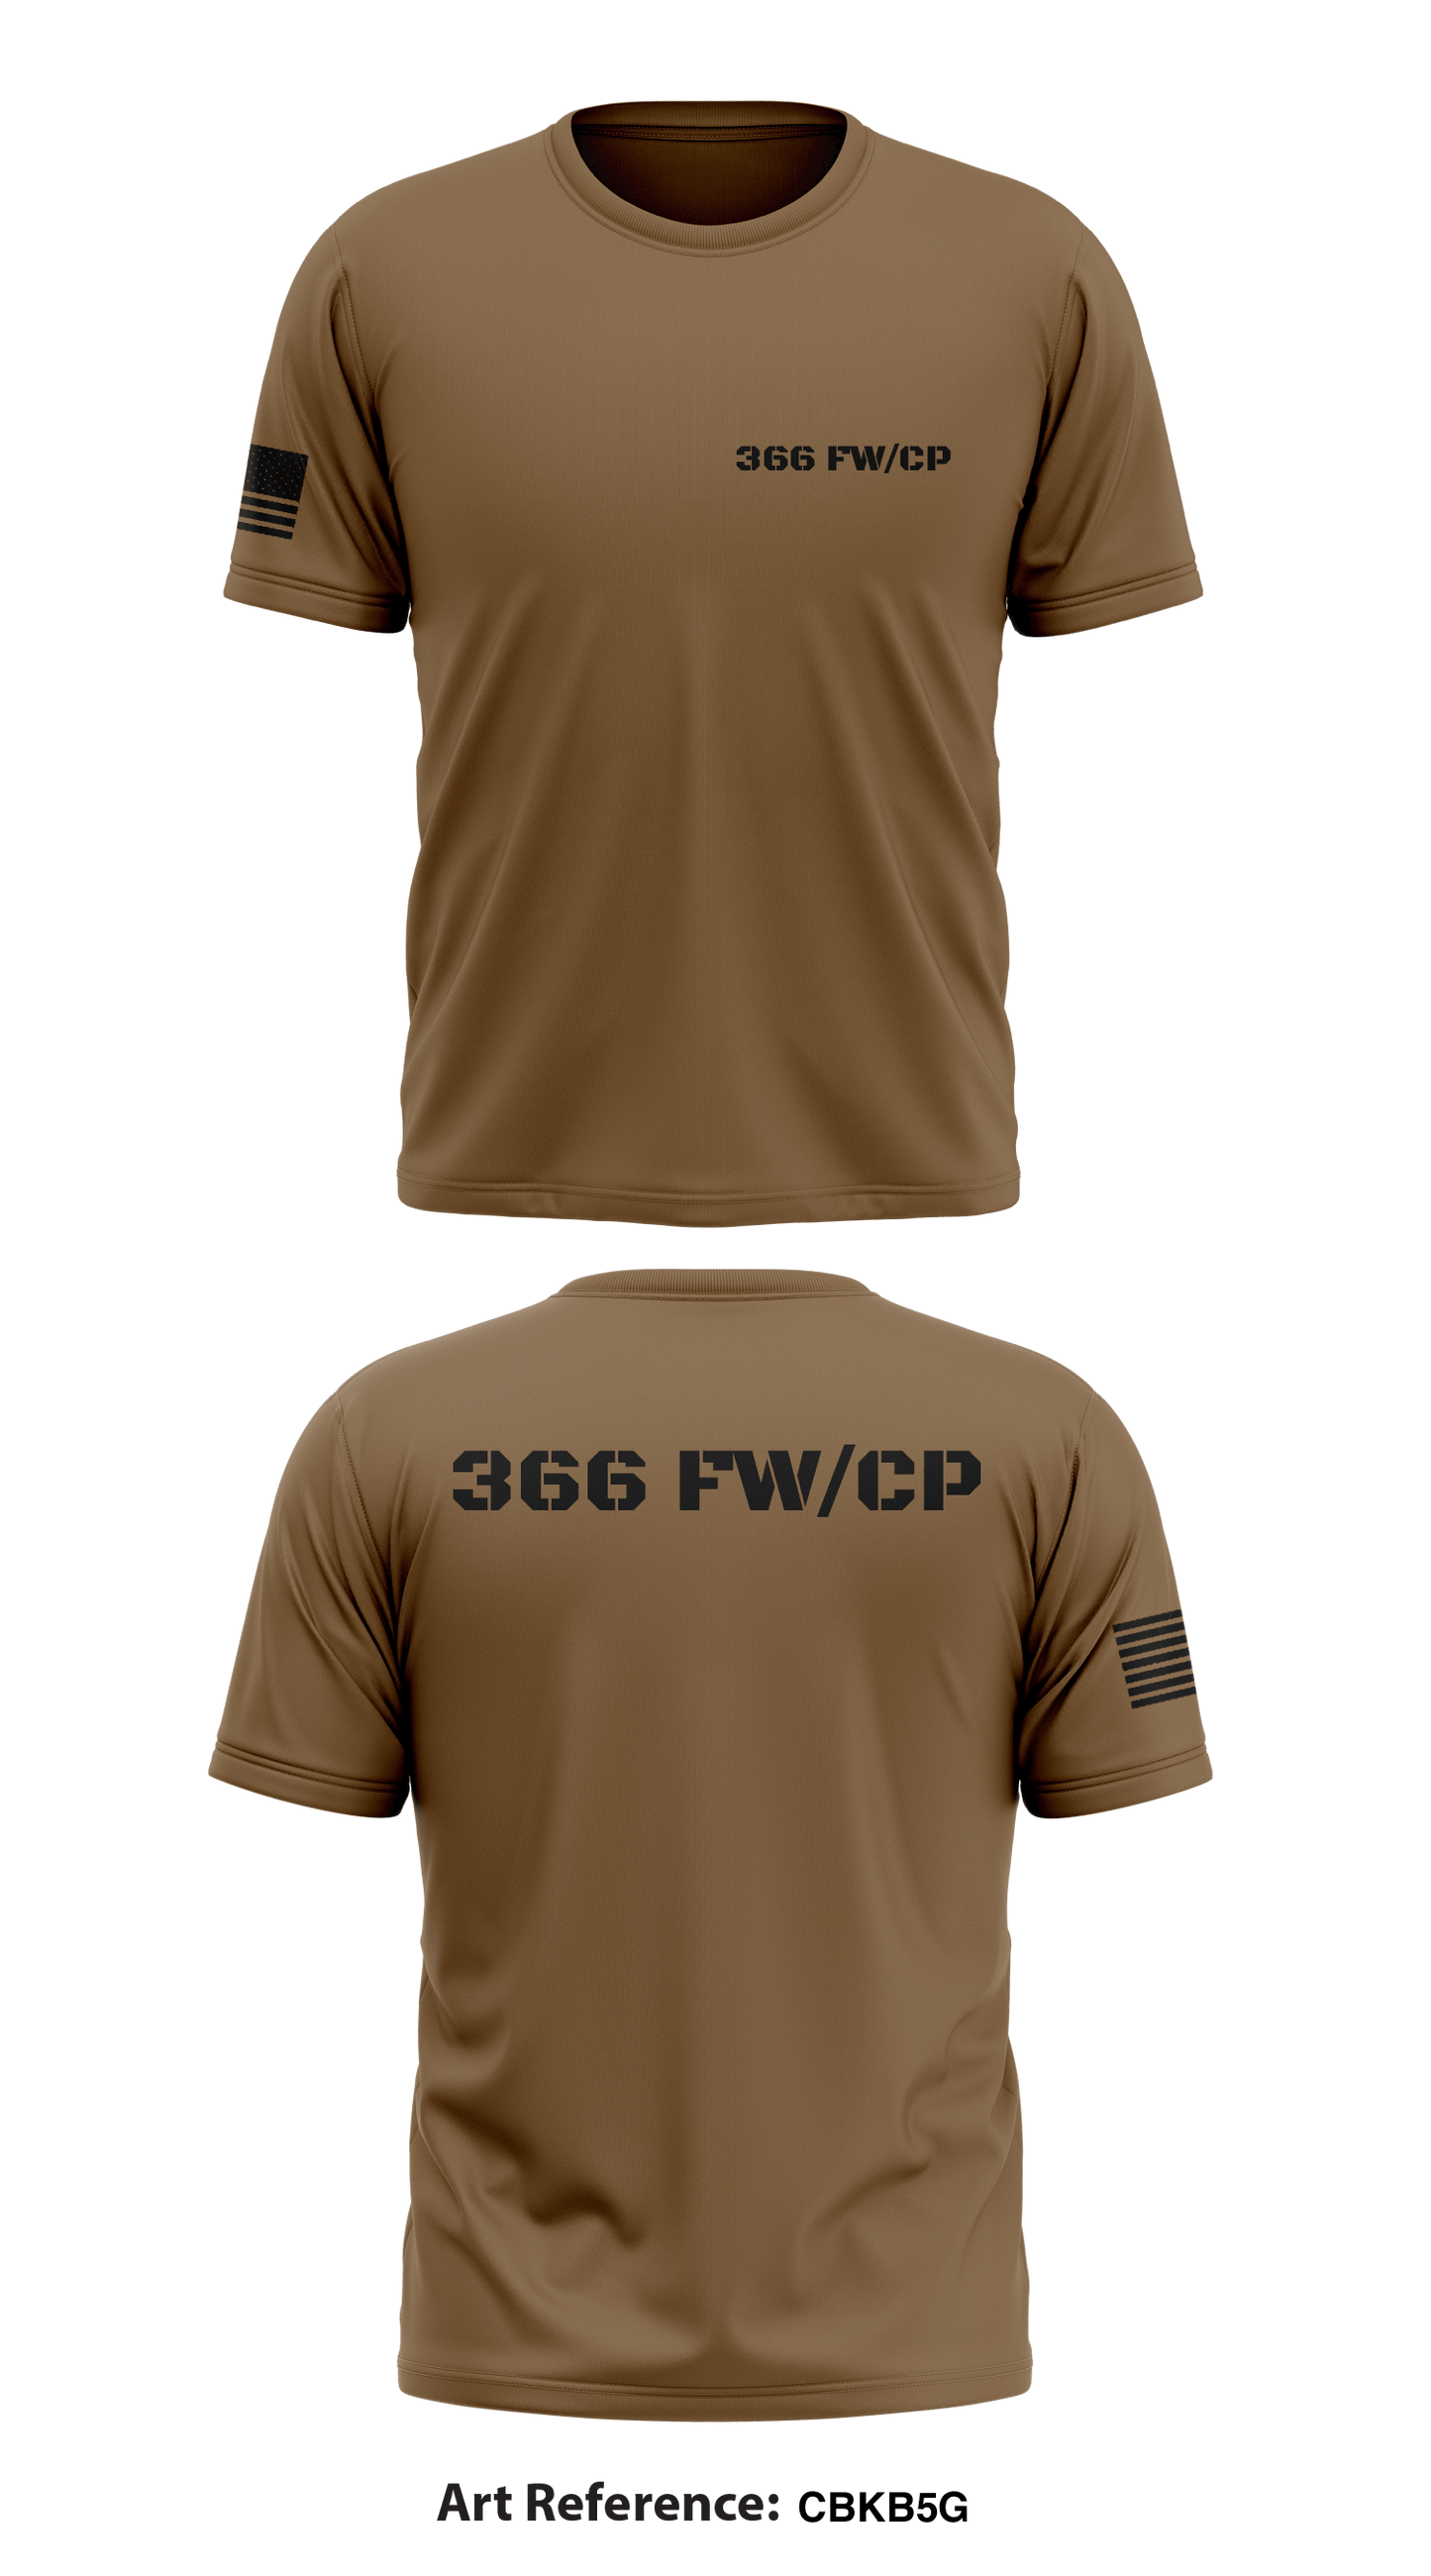 366 FW/CP Store 1 Core Men's SS Performance Tee - Cbkb5g